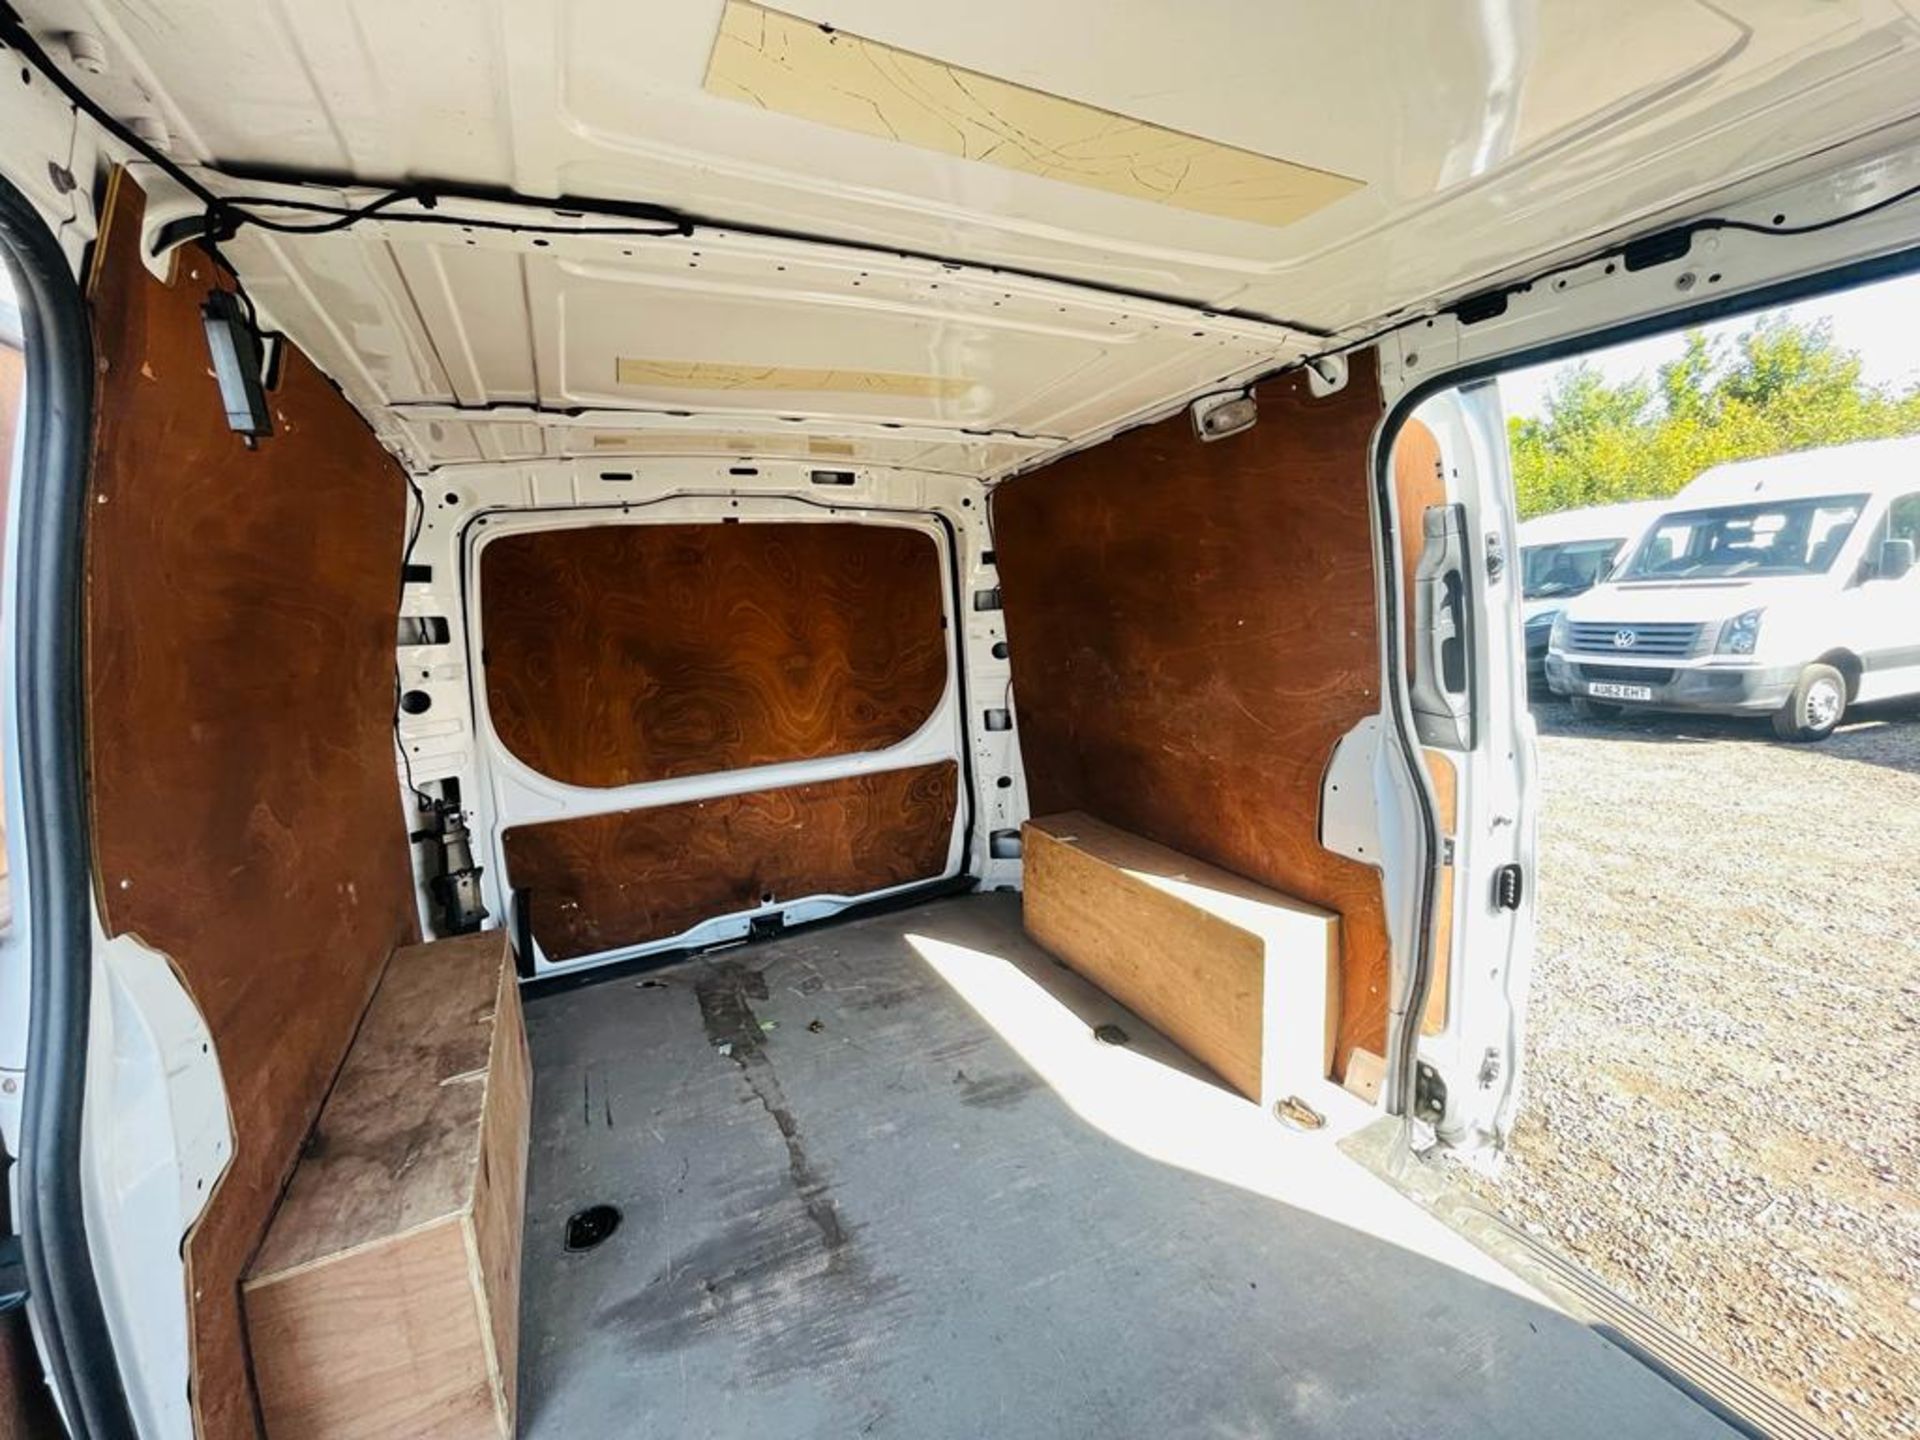 Mercedes Benz Vito 1.6 CDI 111 Long Wheel Base 2015 '65 Reg' Sat Nav - Panel Van - No Vat - Image 14 of 27